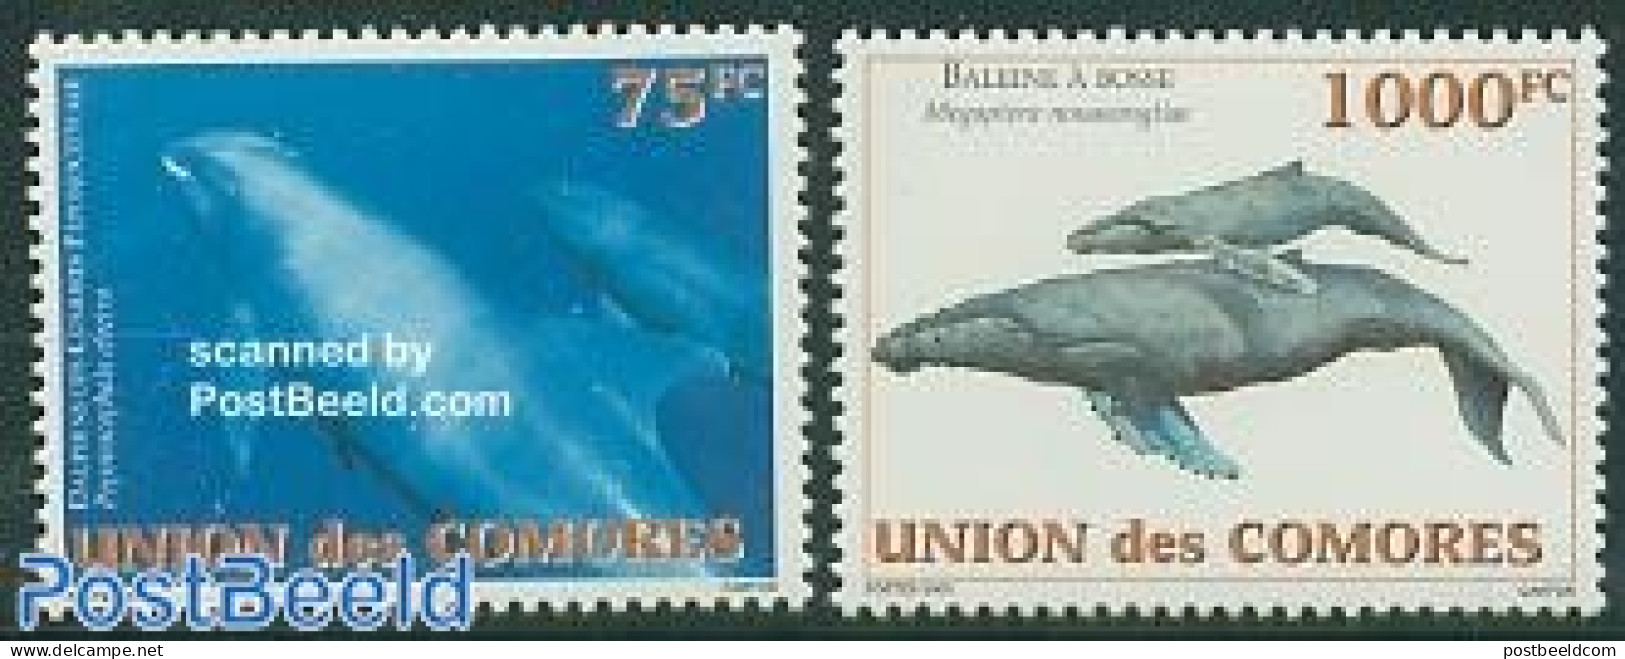 Comoros 2003 Whales & Dolphins 2v, Mint NH, Nature - Sea Mammals - Comoros